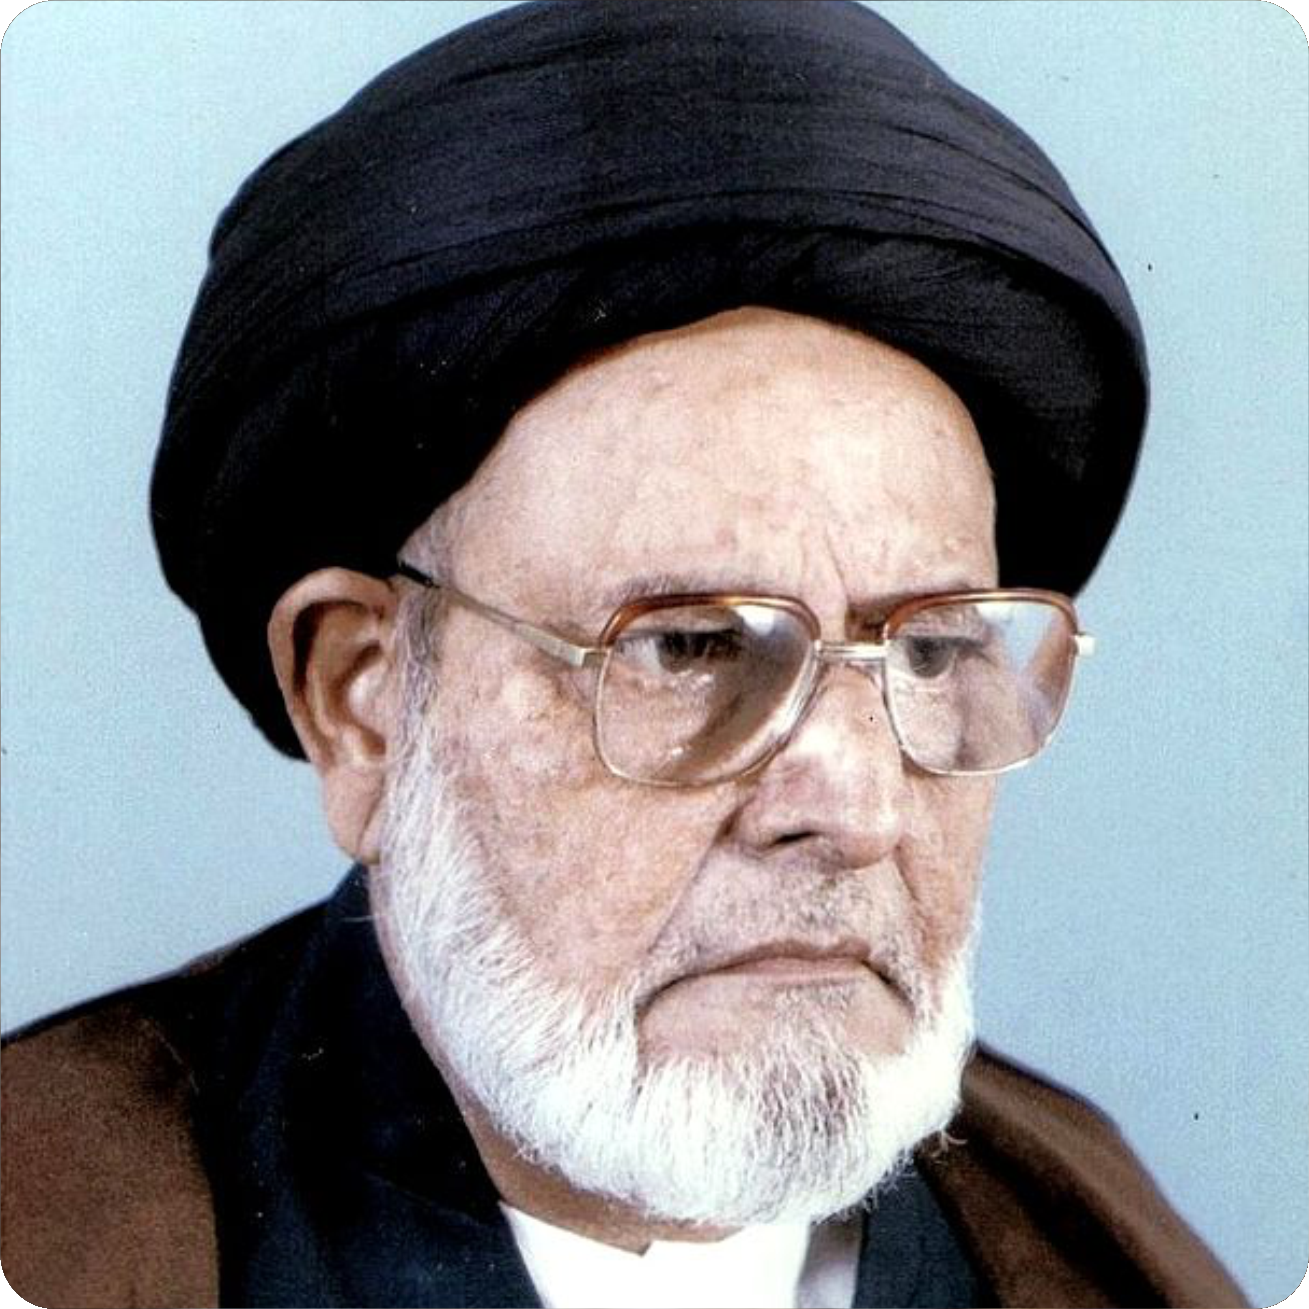 Sayyid Saeed Akhtar Rizvi